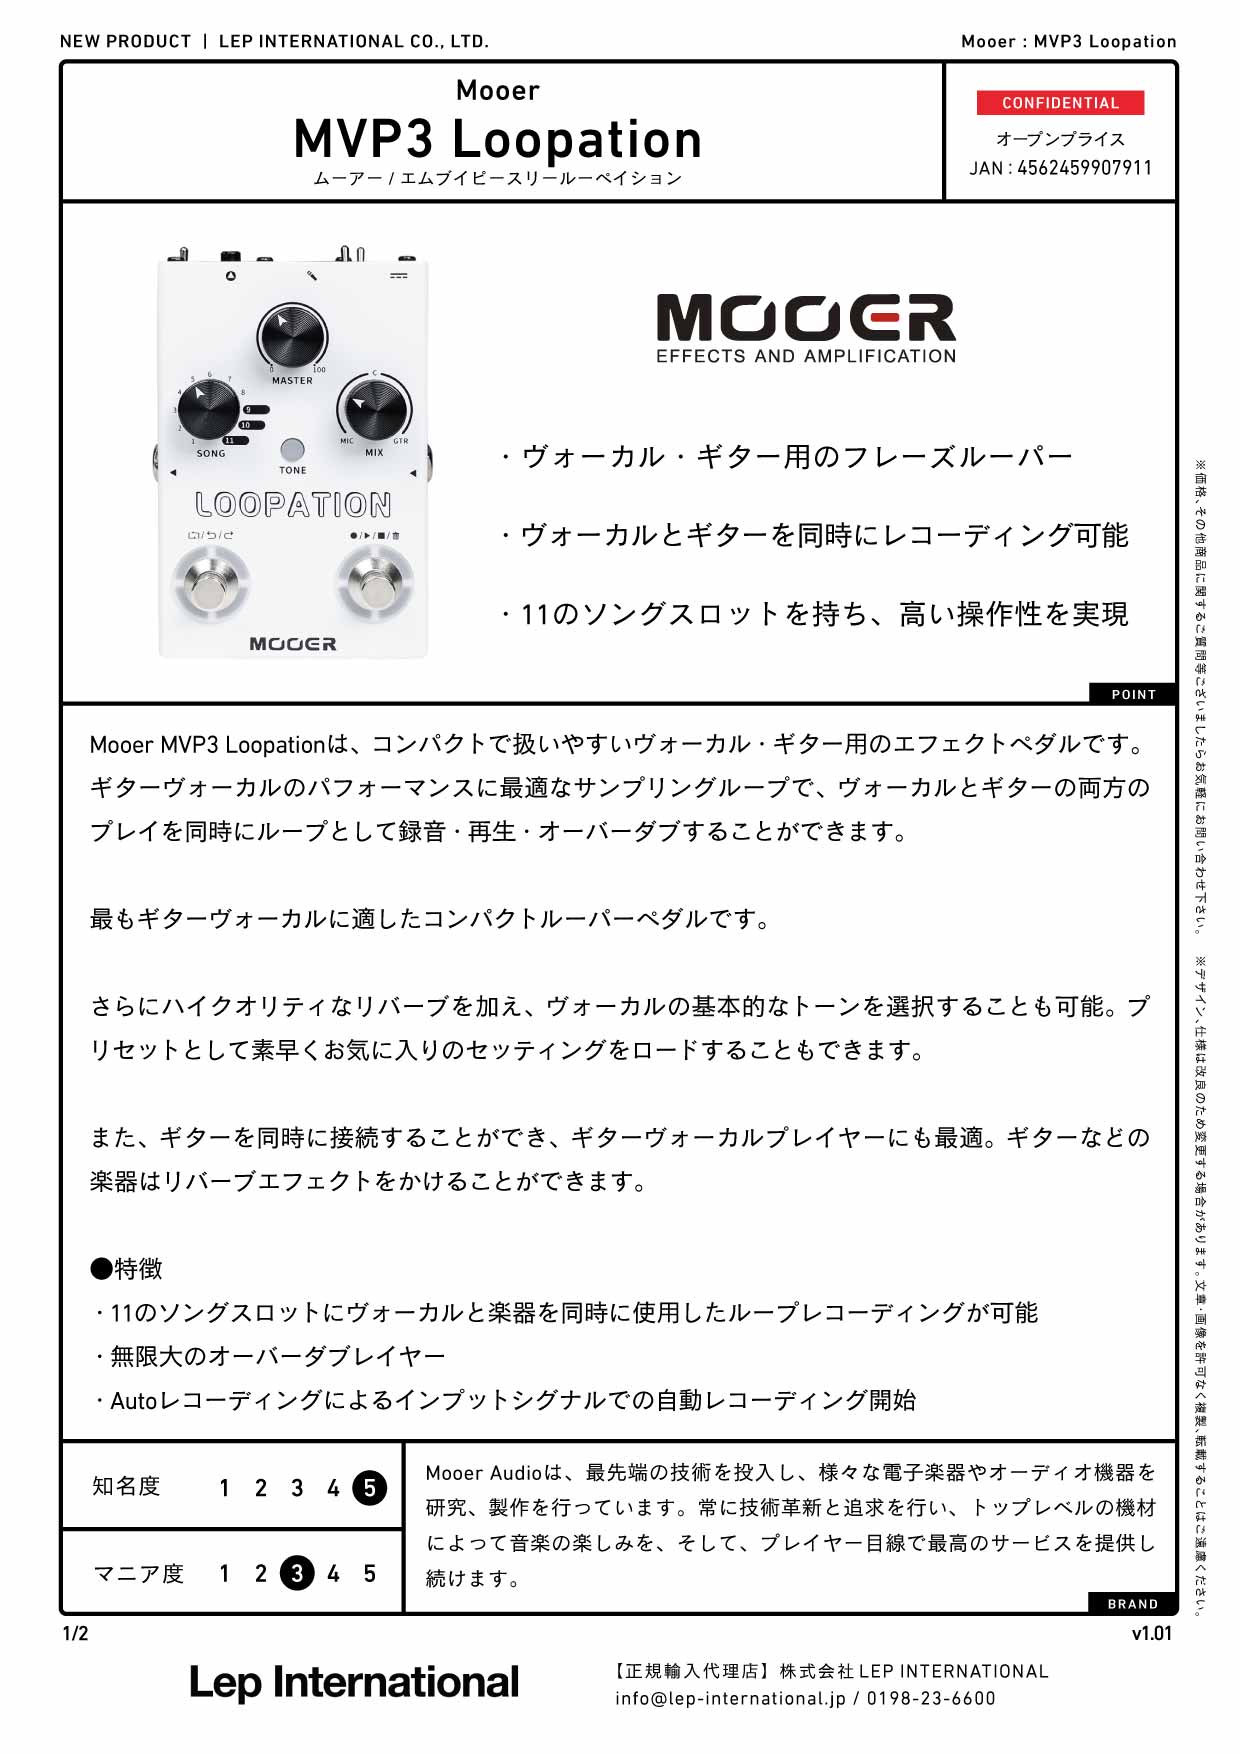 Mooer / MVP3 Loopation